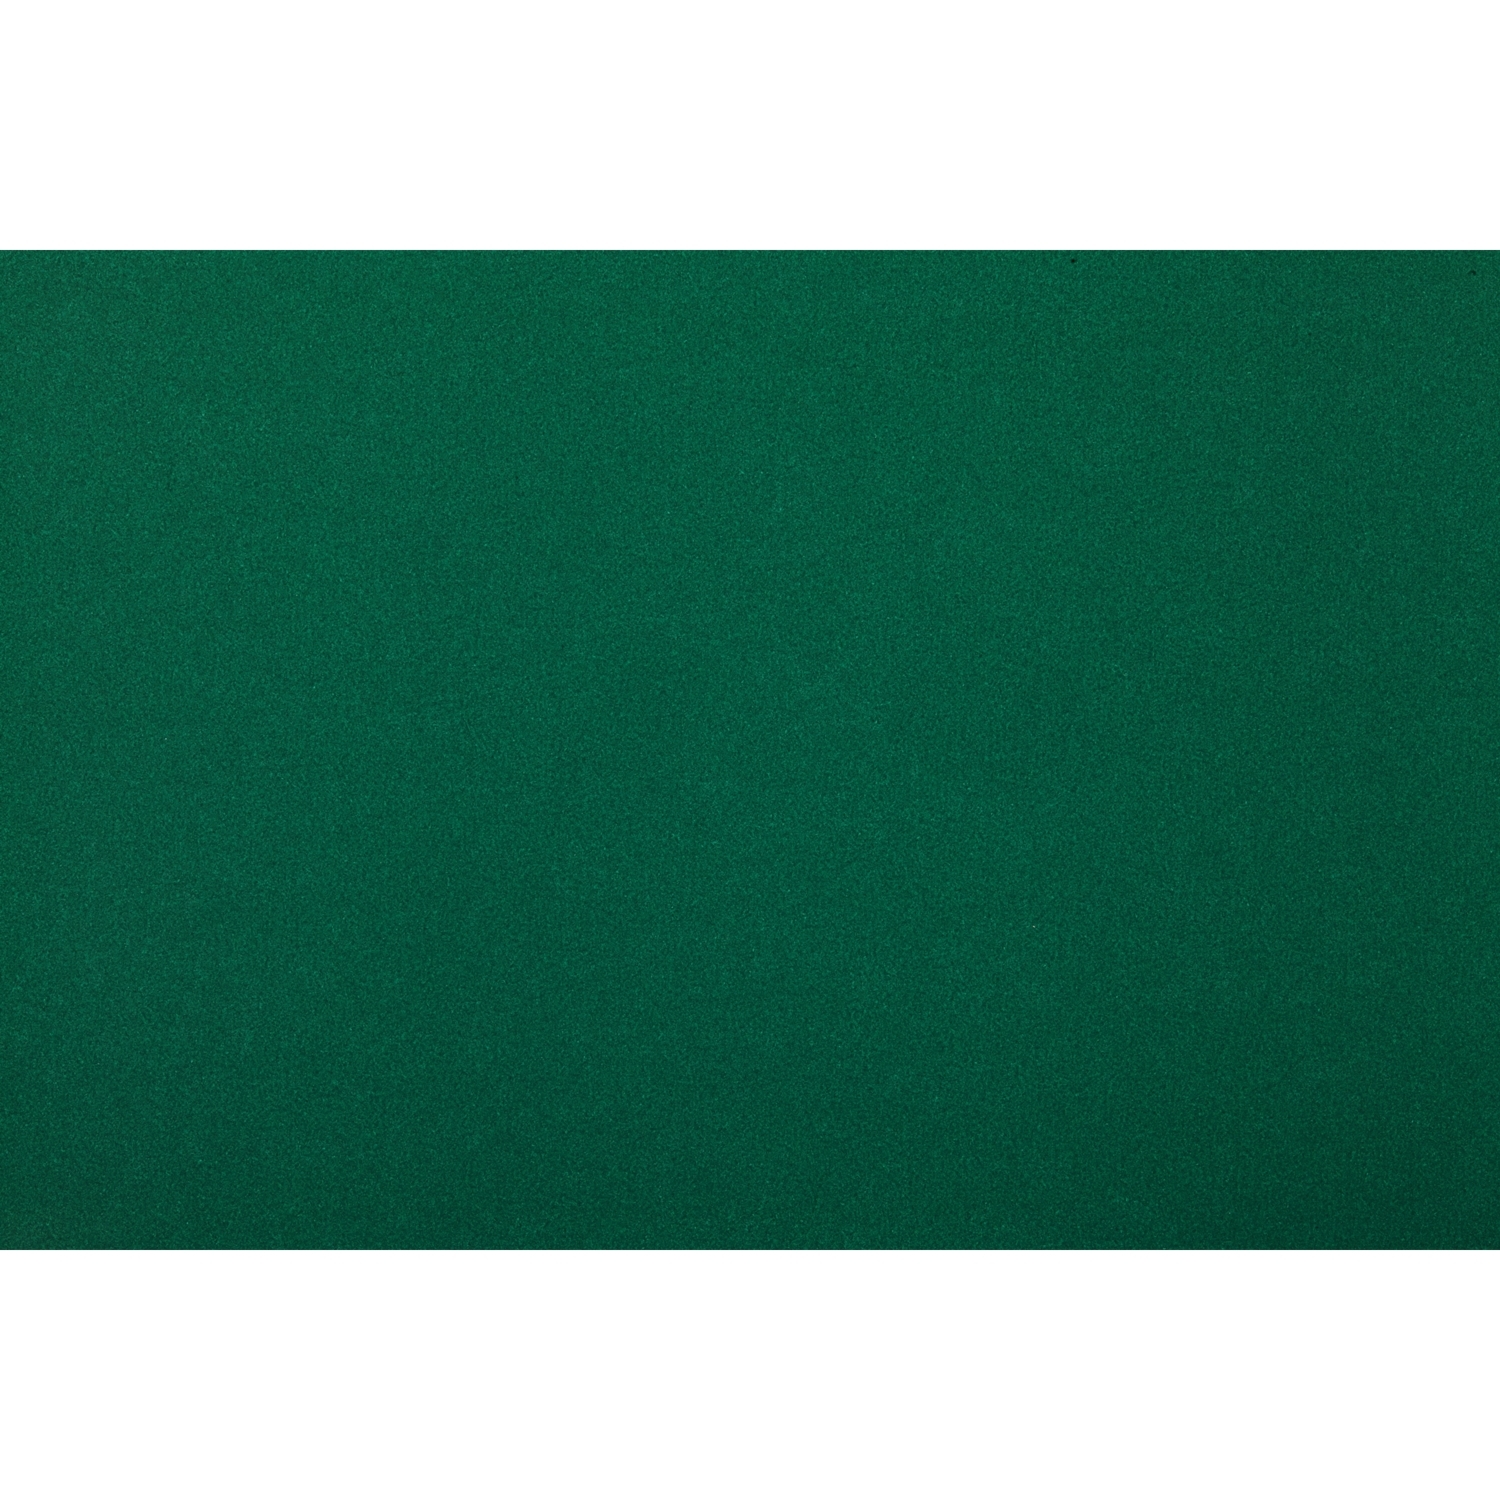 Slater Harrison Colourcard - Emerald Image